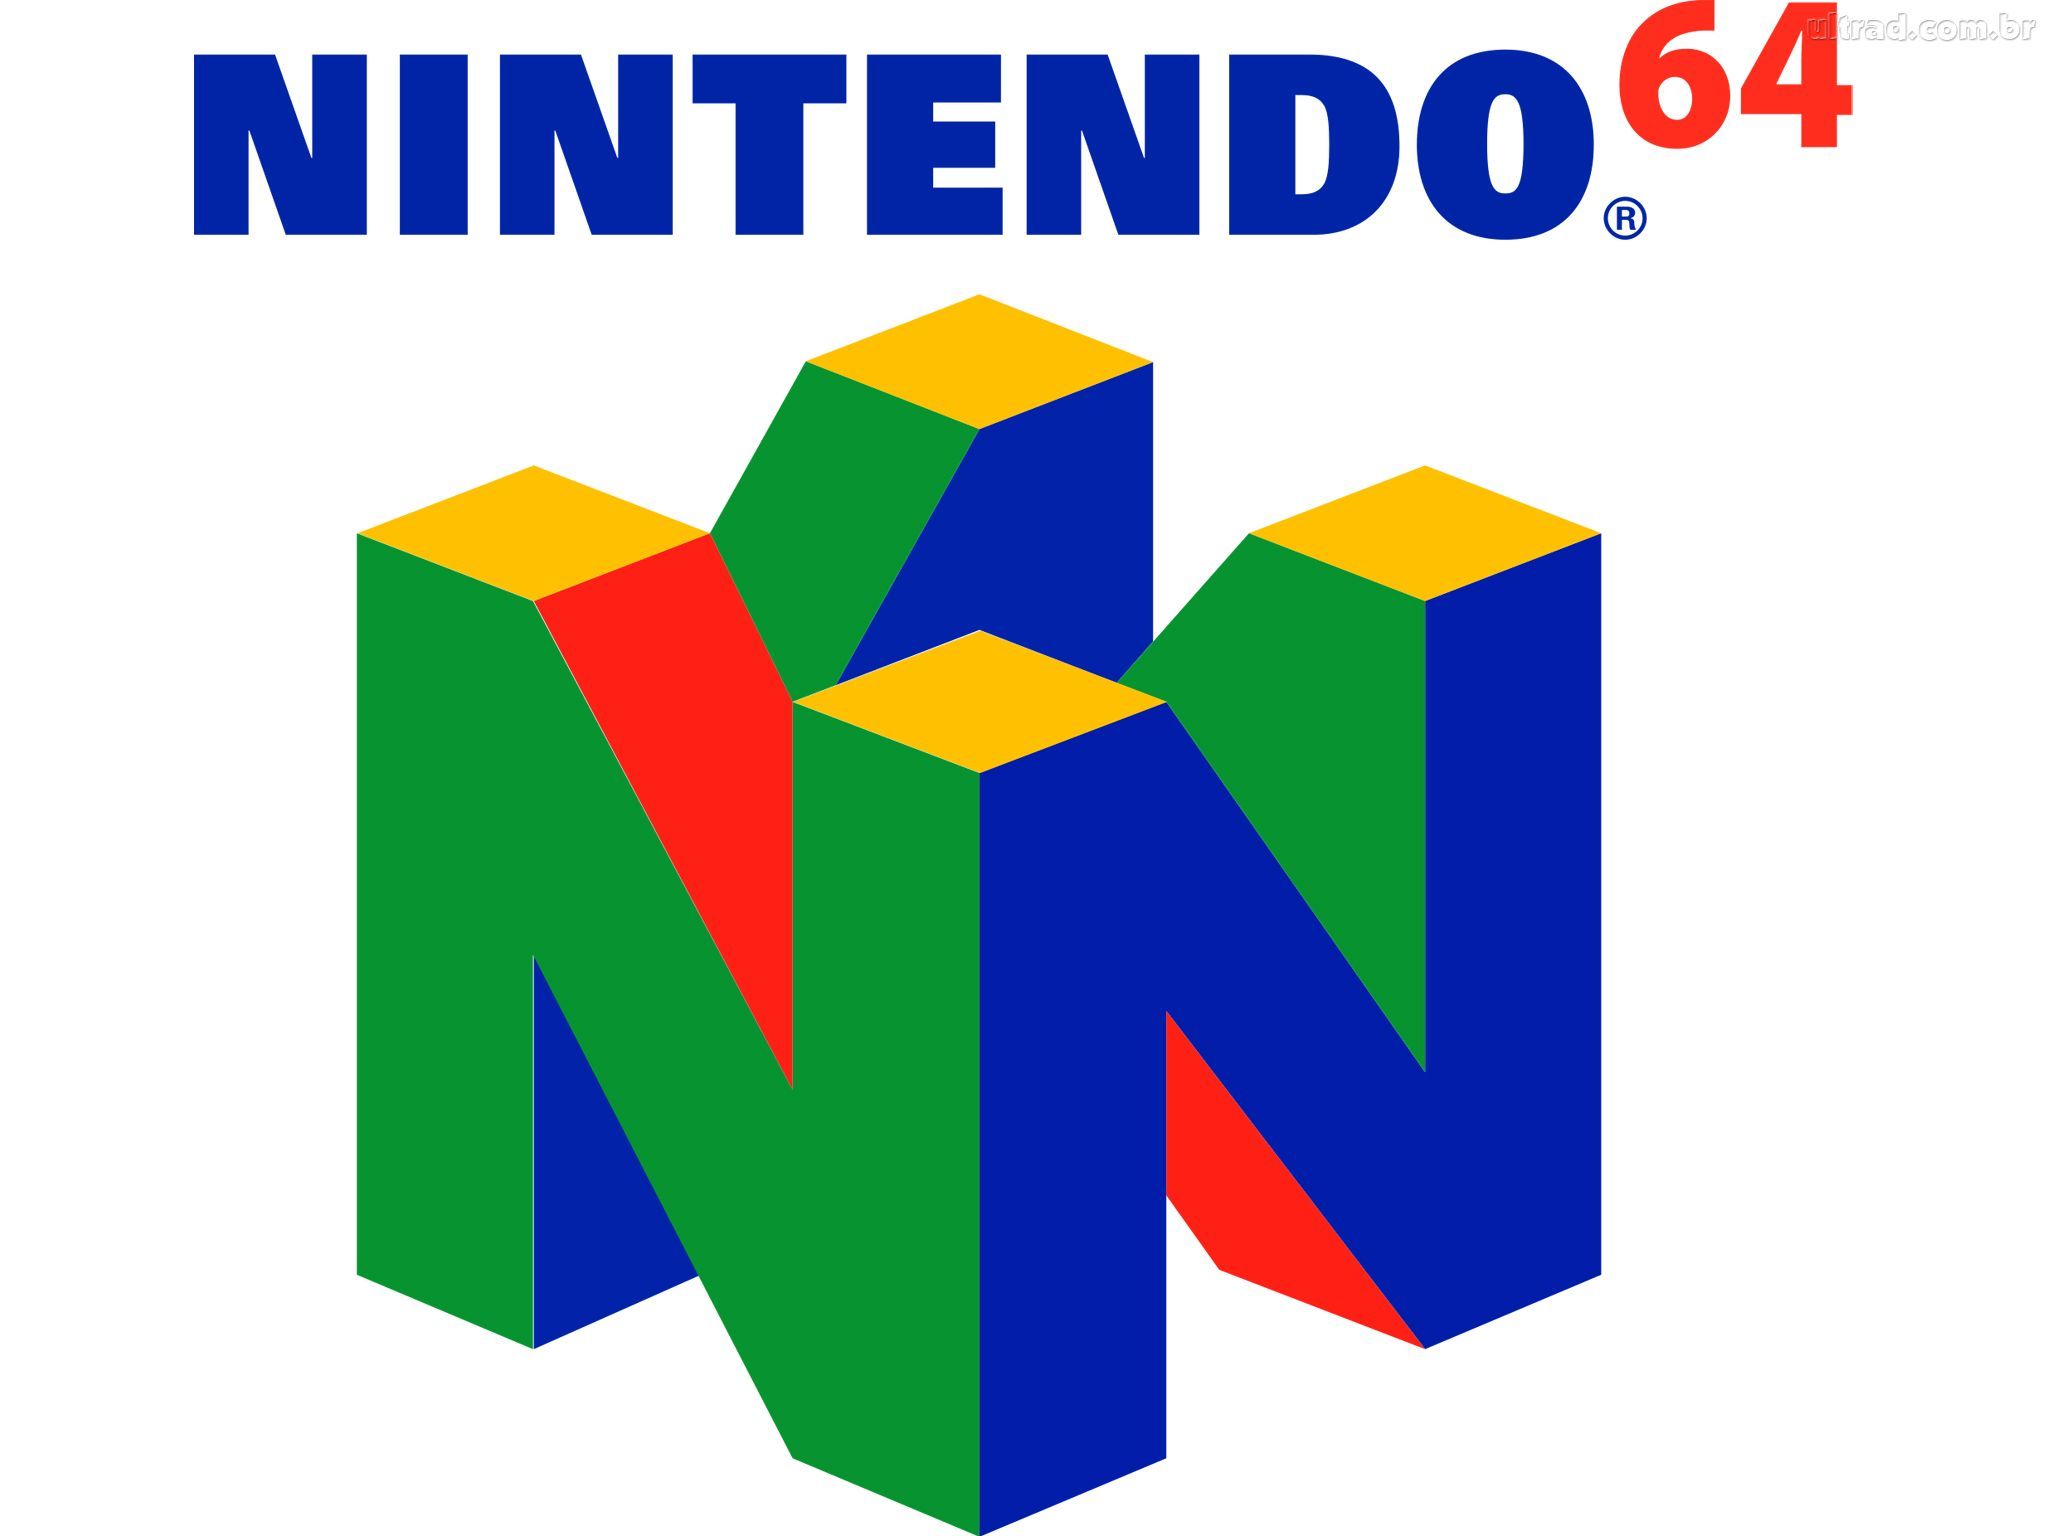 Nintendo 64 Wallpaper